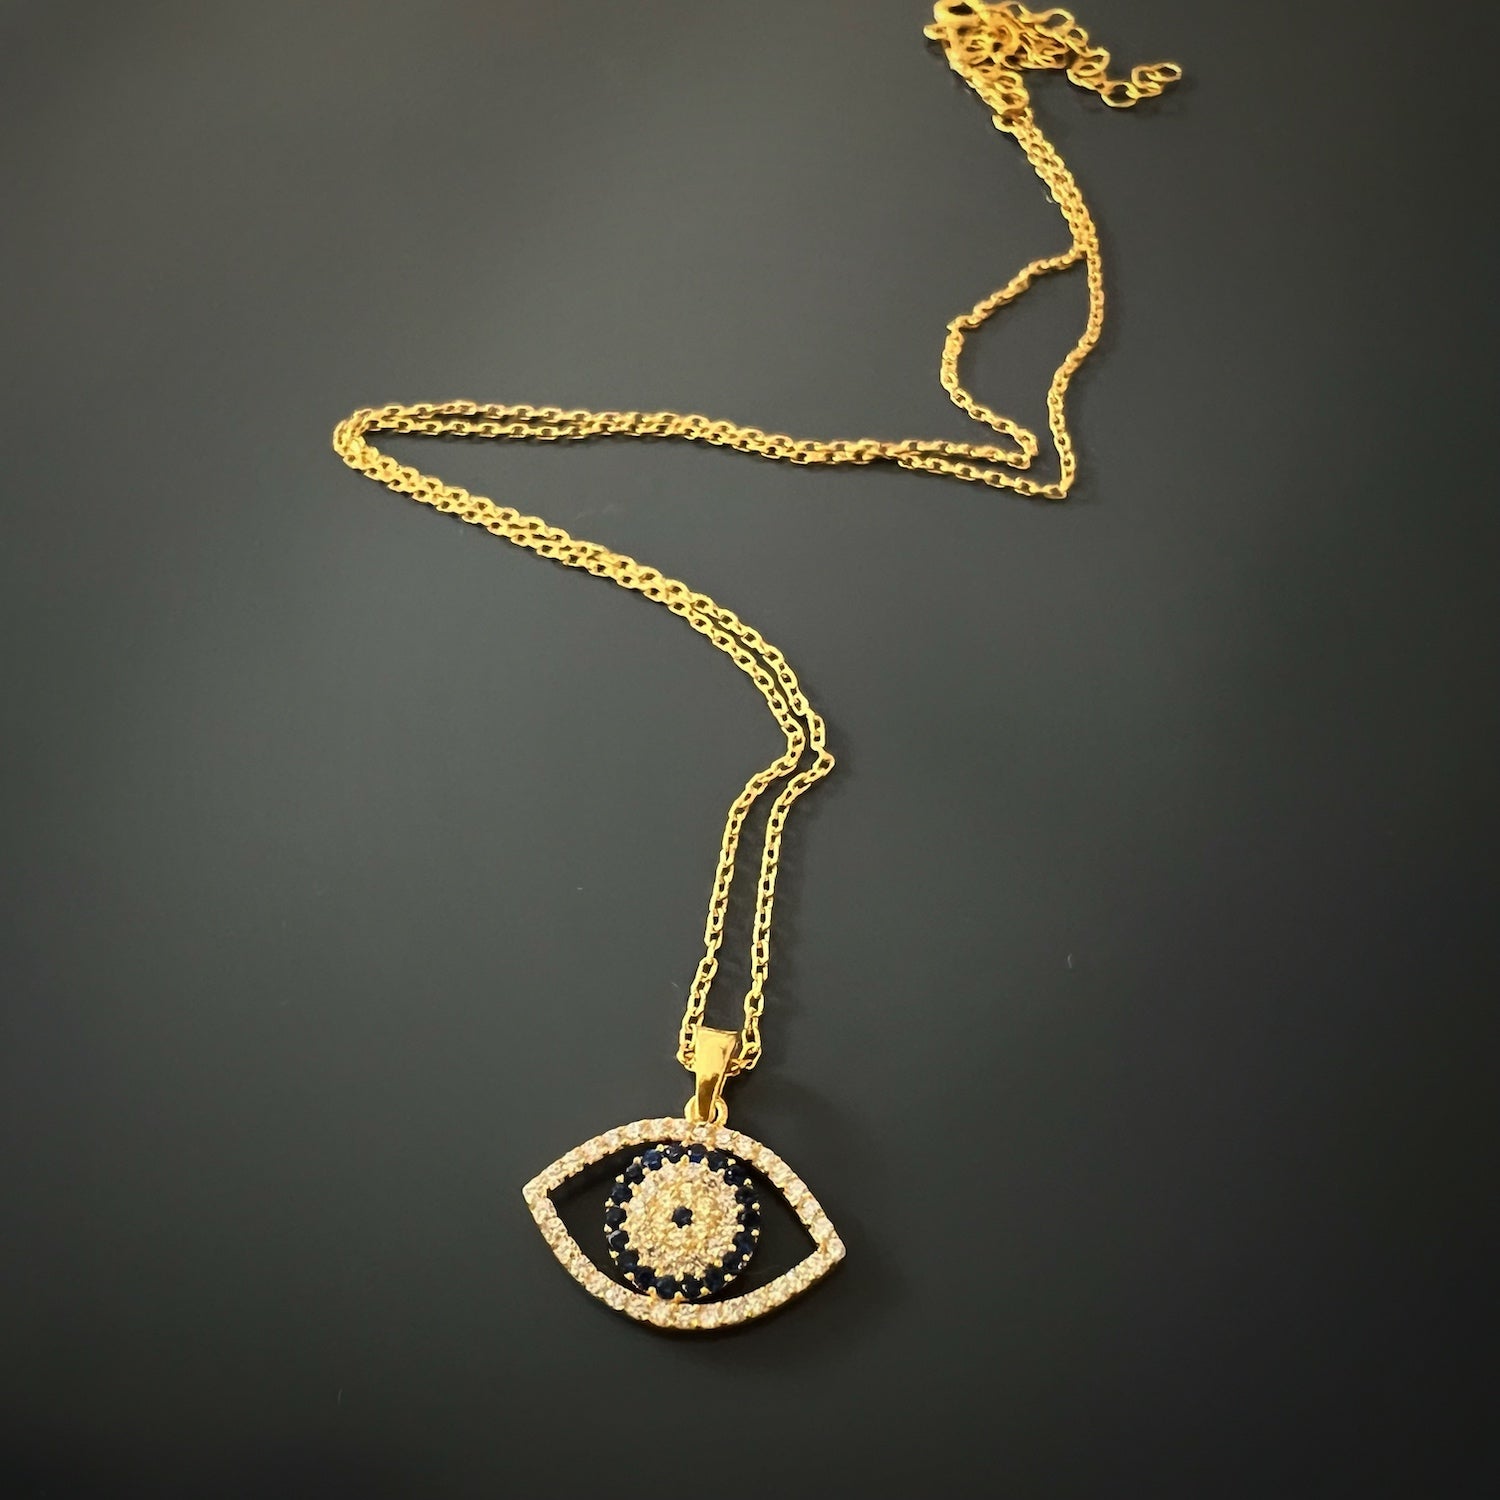 A detailed shot of the sparkling CZ diamonds on the evil eye pendant of the Sparkly Evil Eye Necklace.